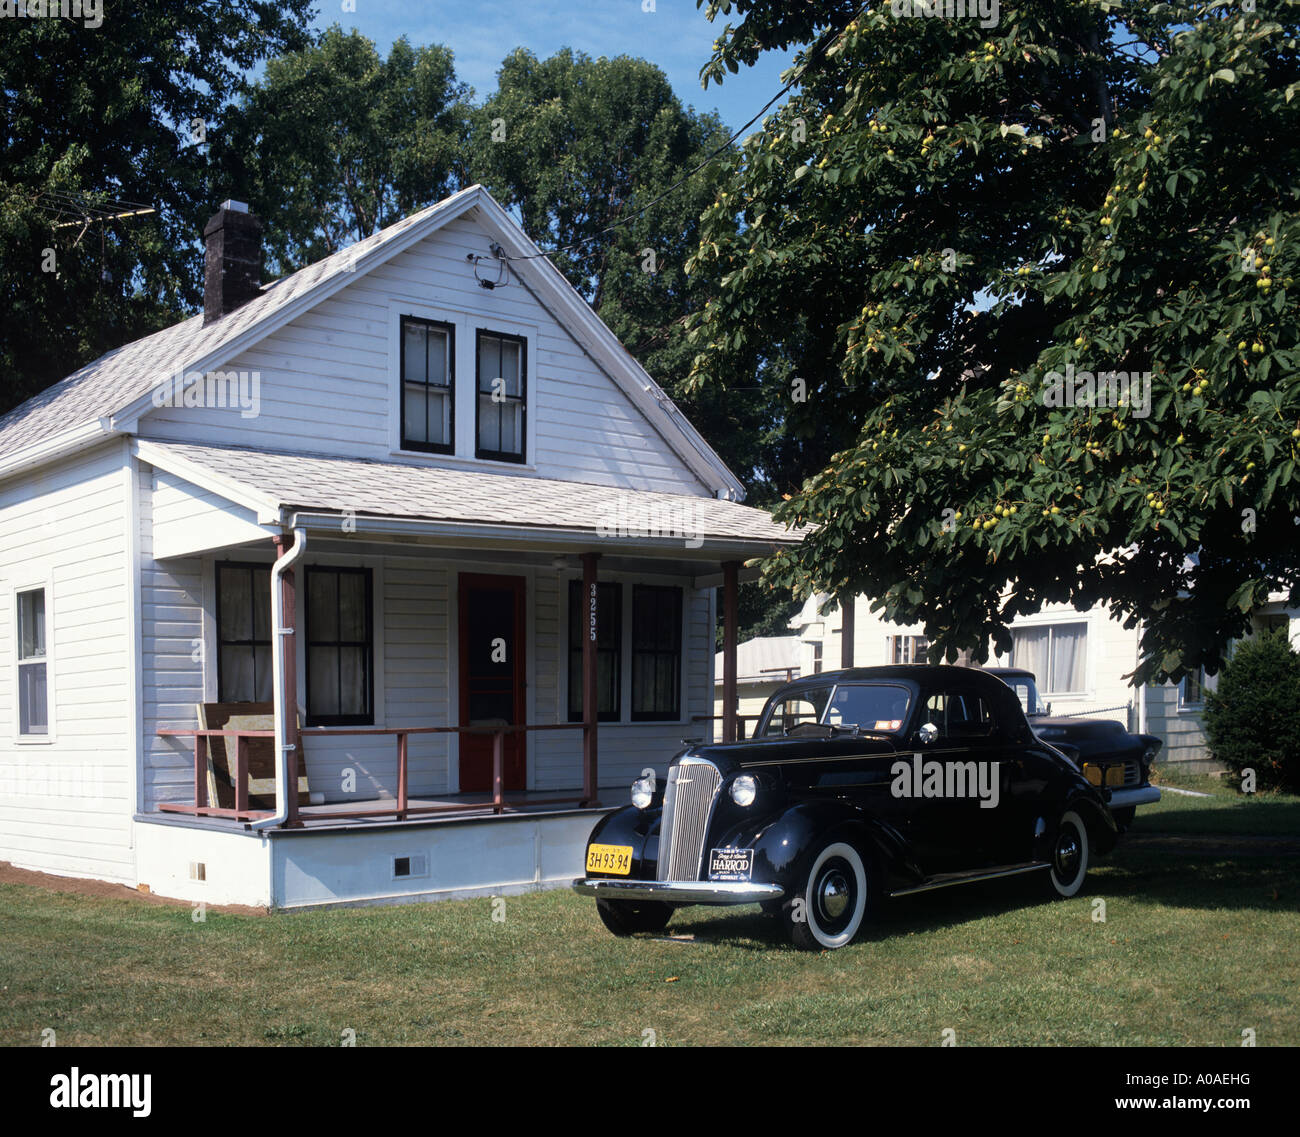 USA Historical Car Chevrolet Stock Photo